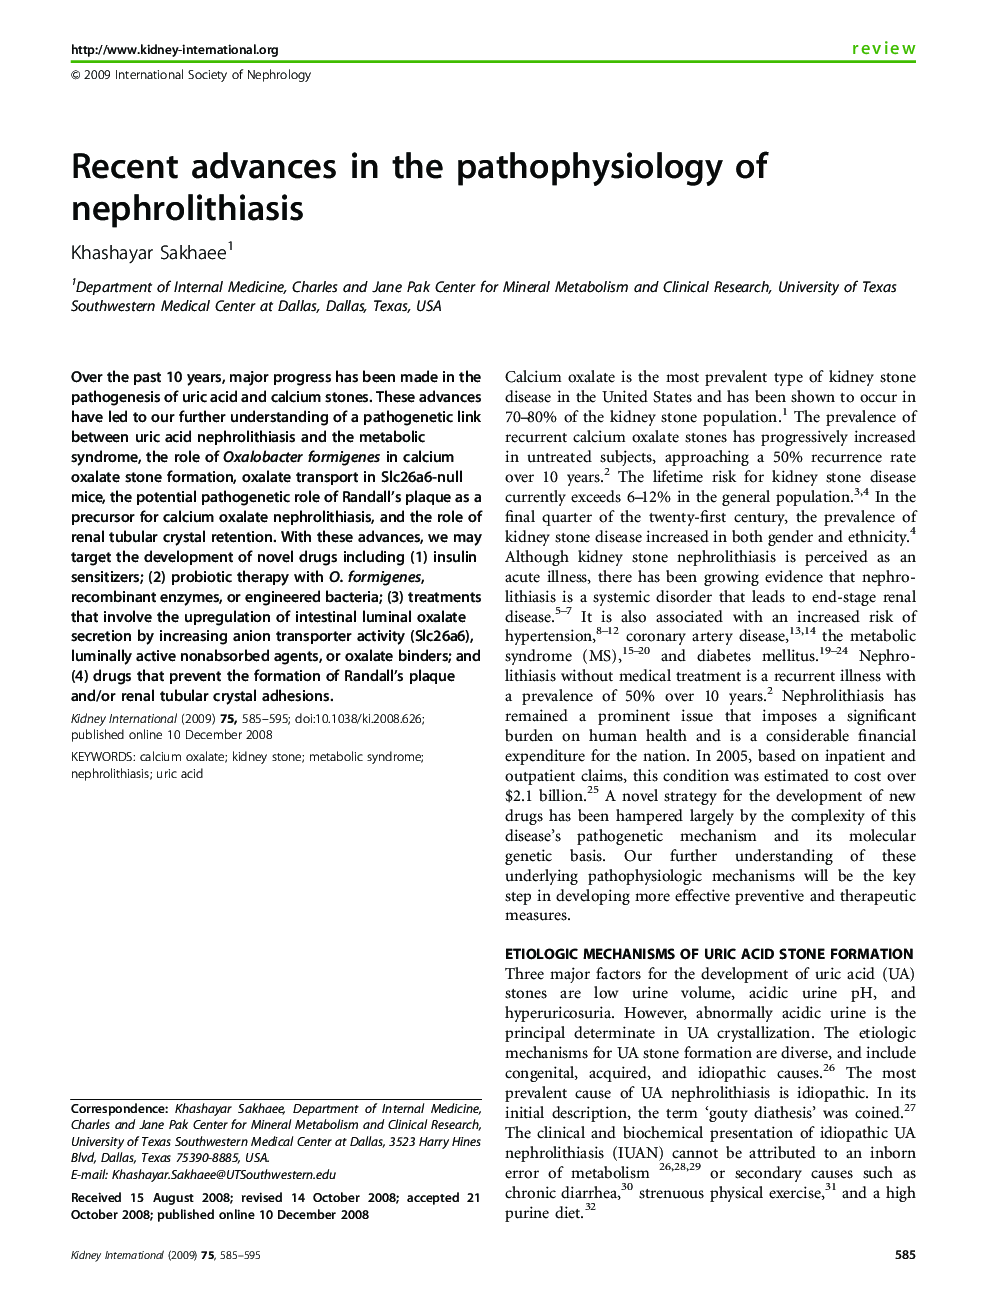 Recent advances in the pathophysiology of nephrolithiasis 